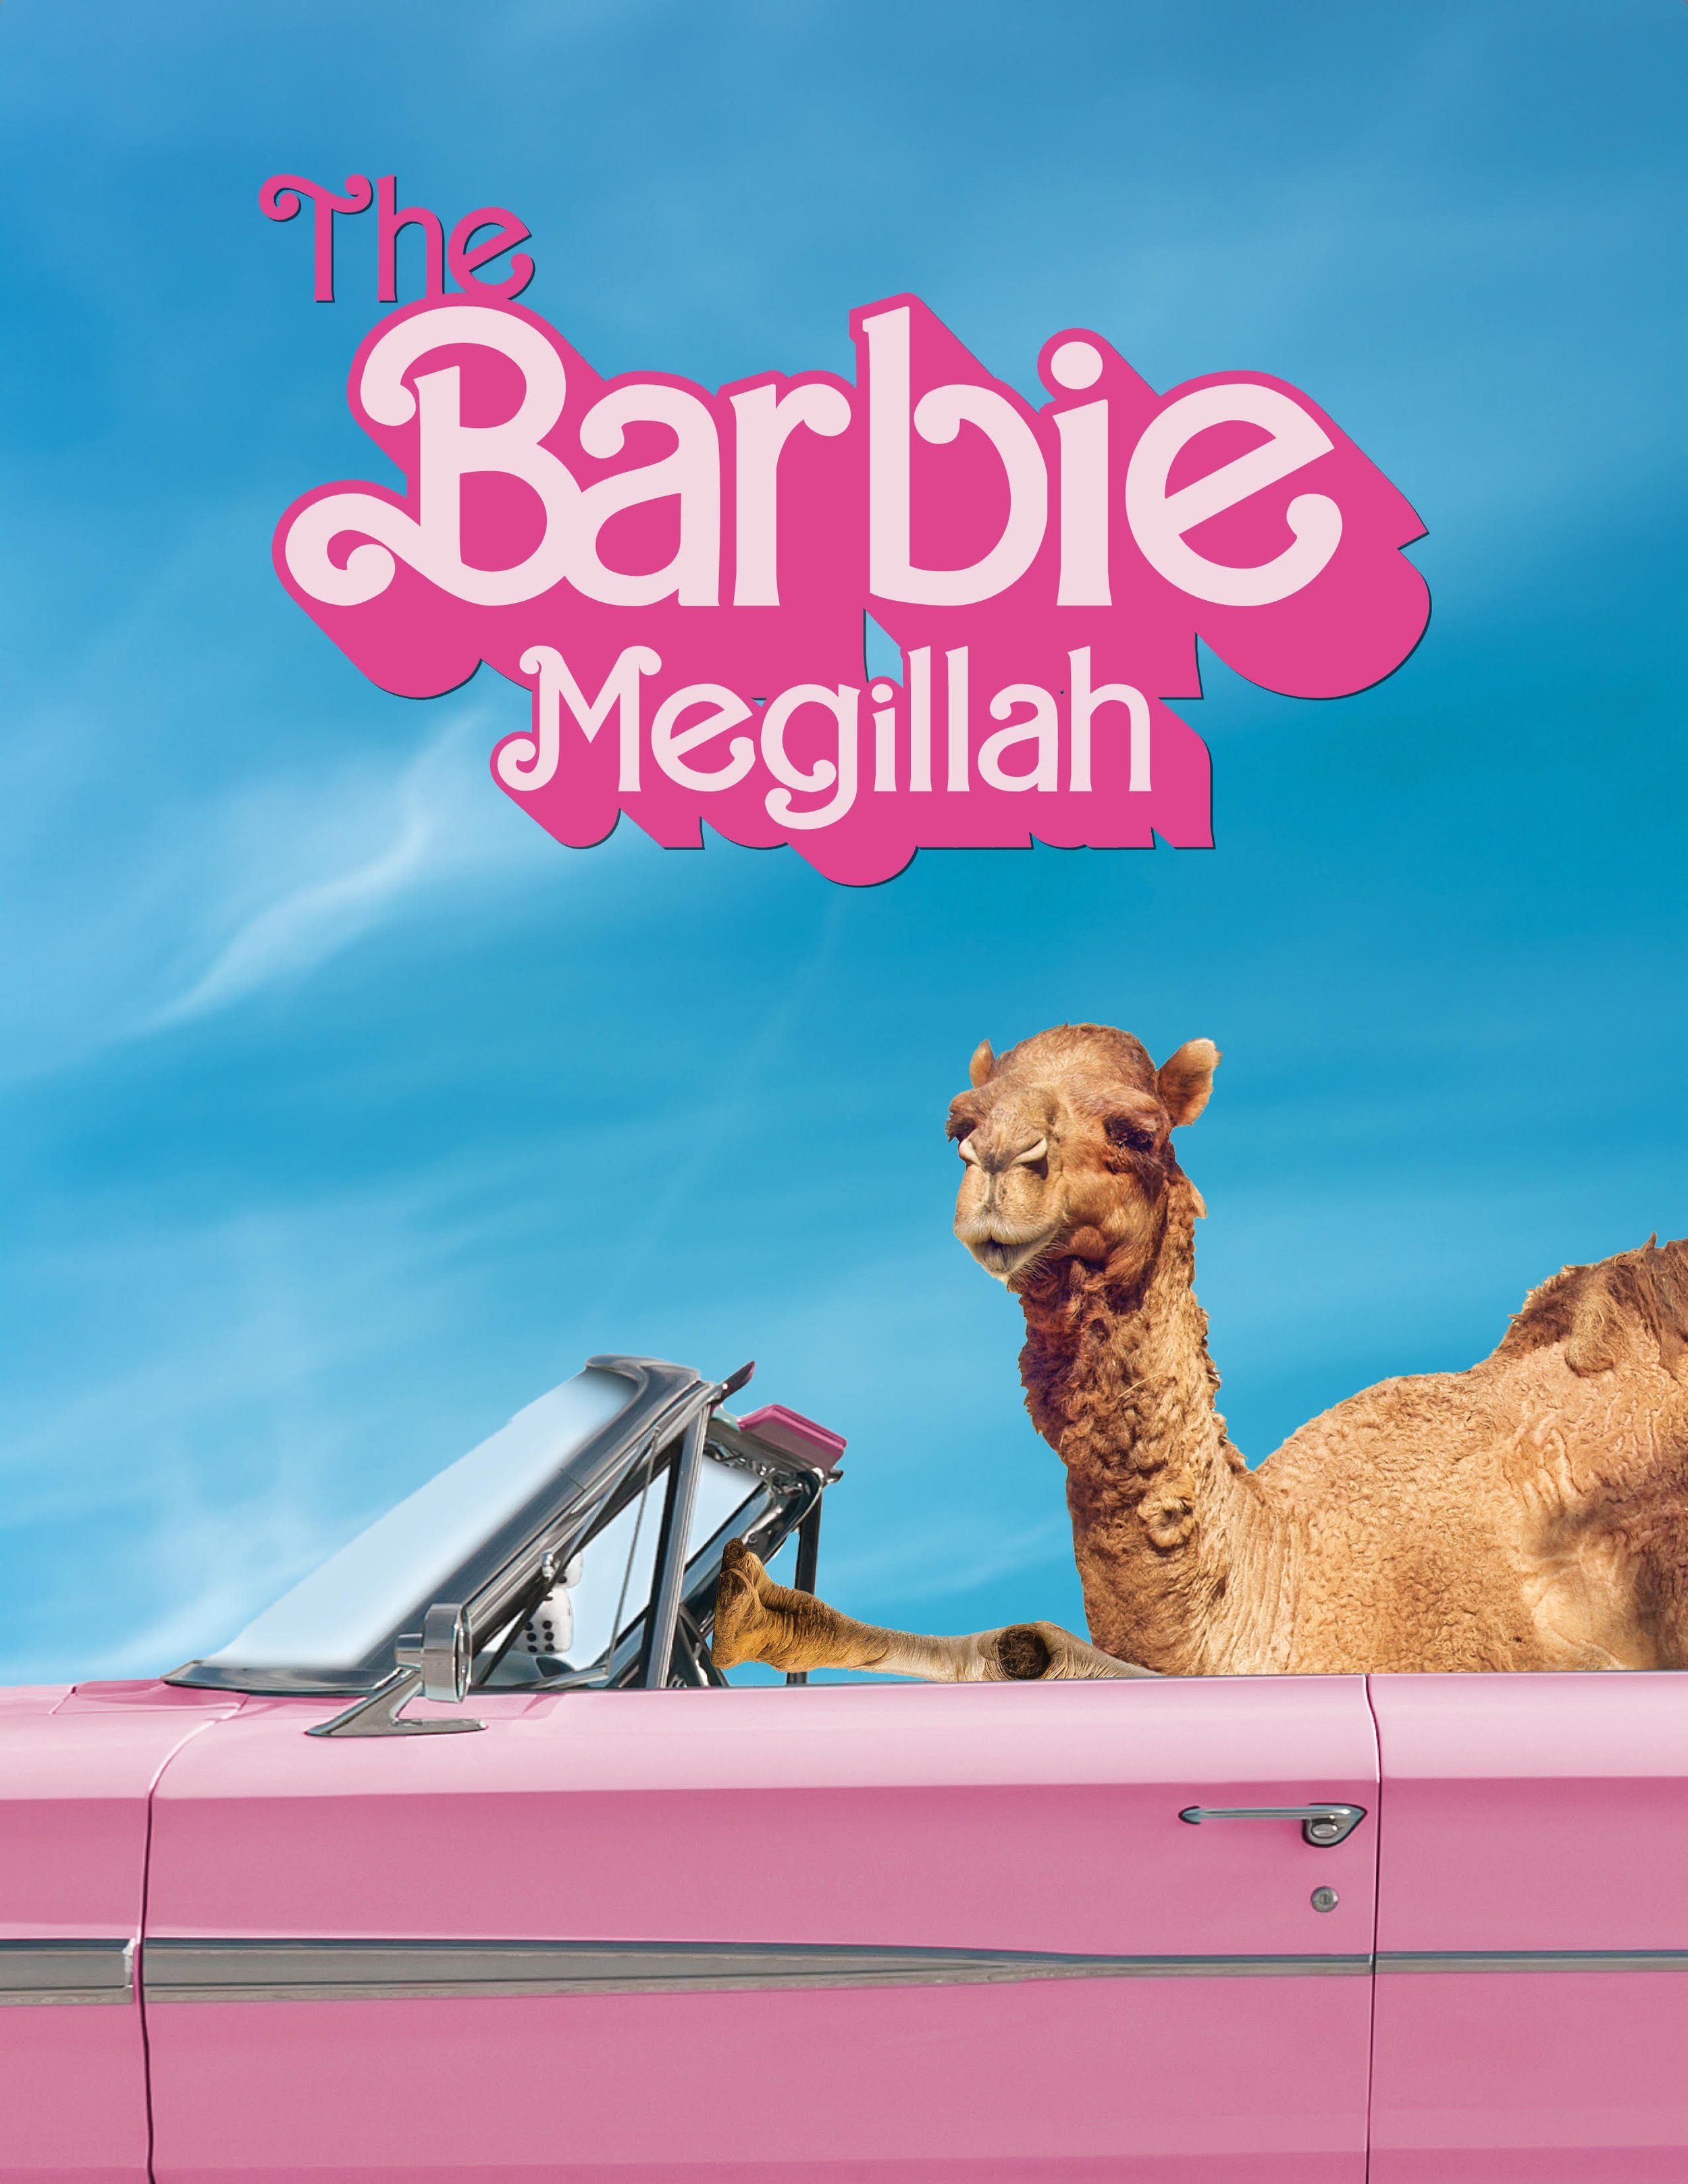 The Barbie Megillah